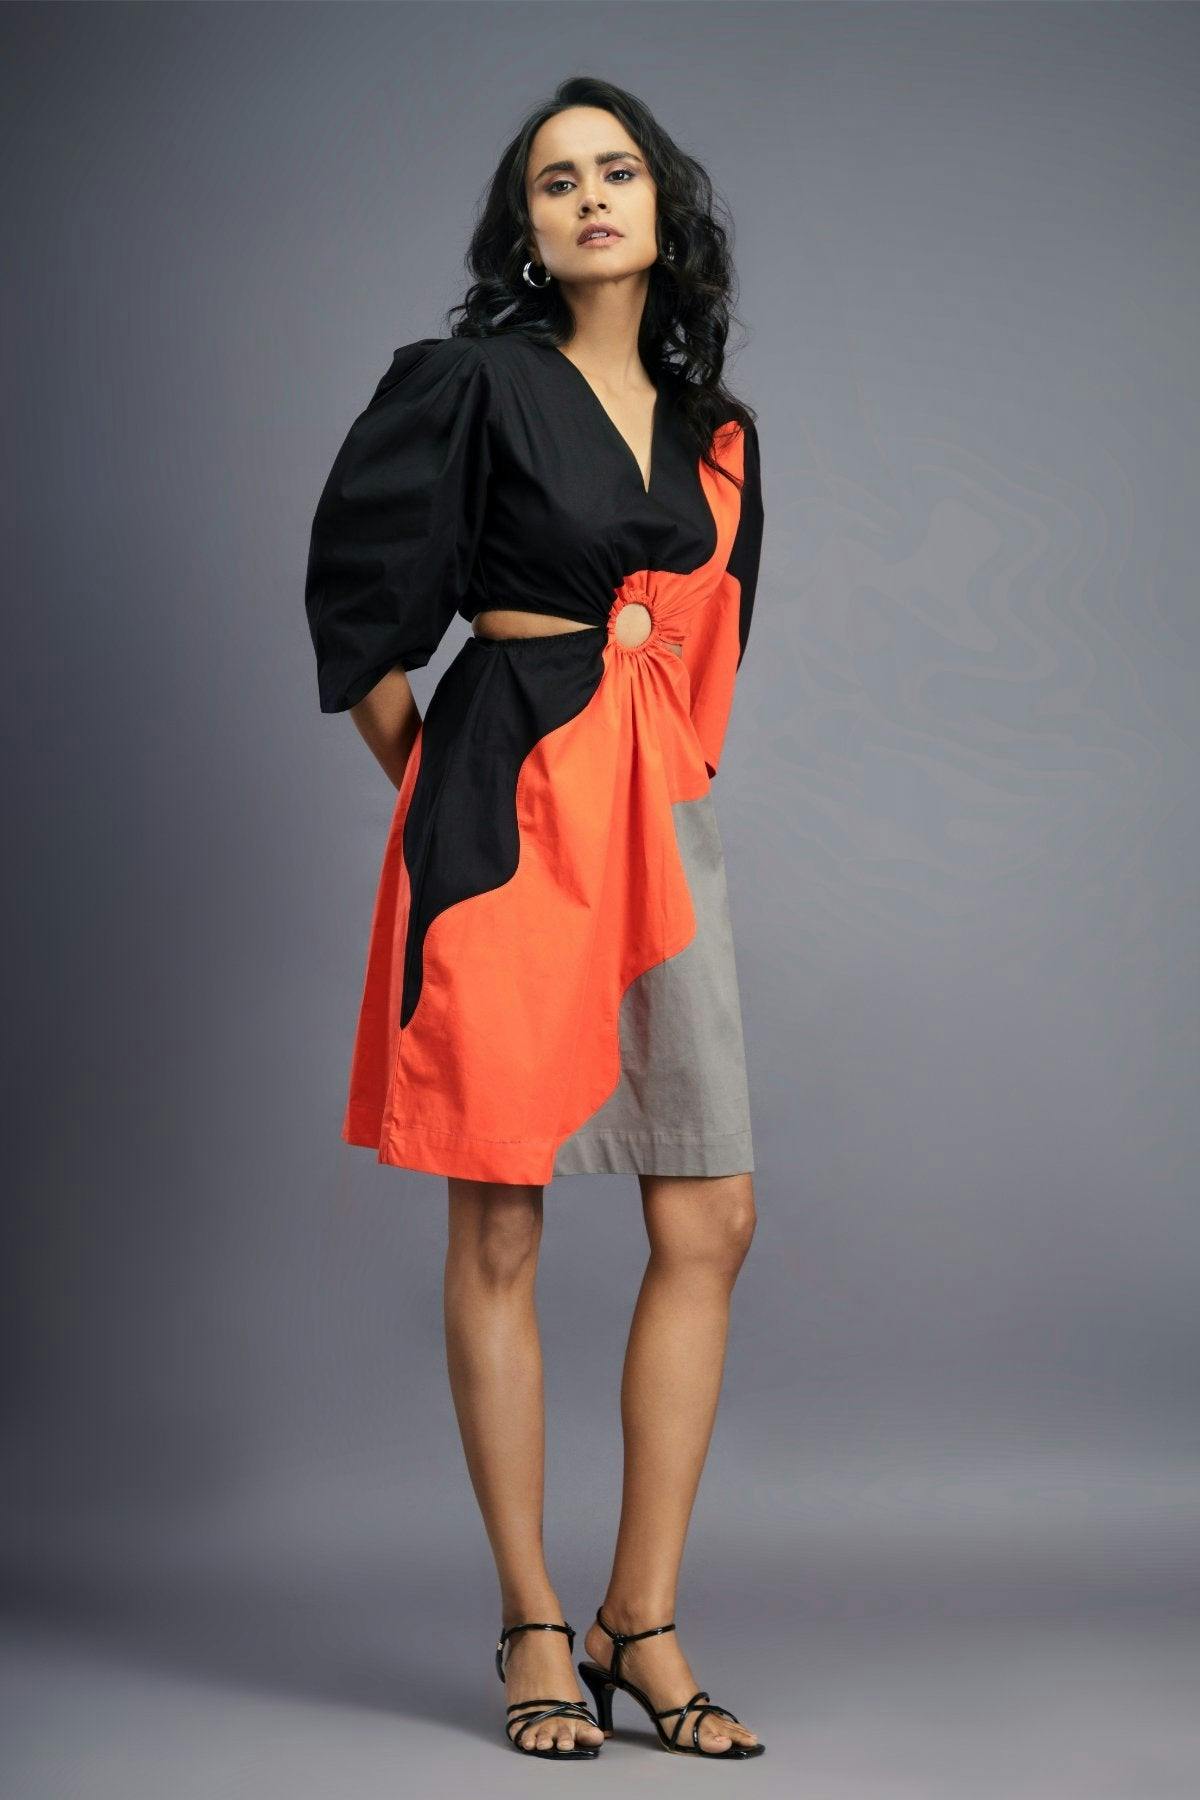 Thumbnail preview #5 for BB-1106-OG - Black Orange Cutout Dress